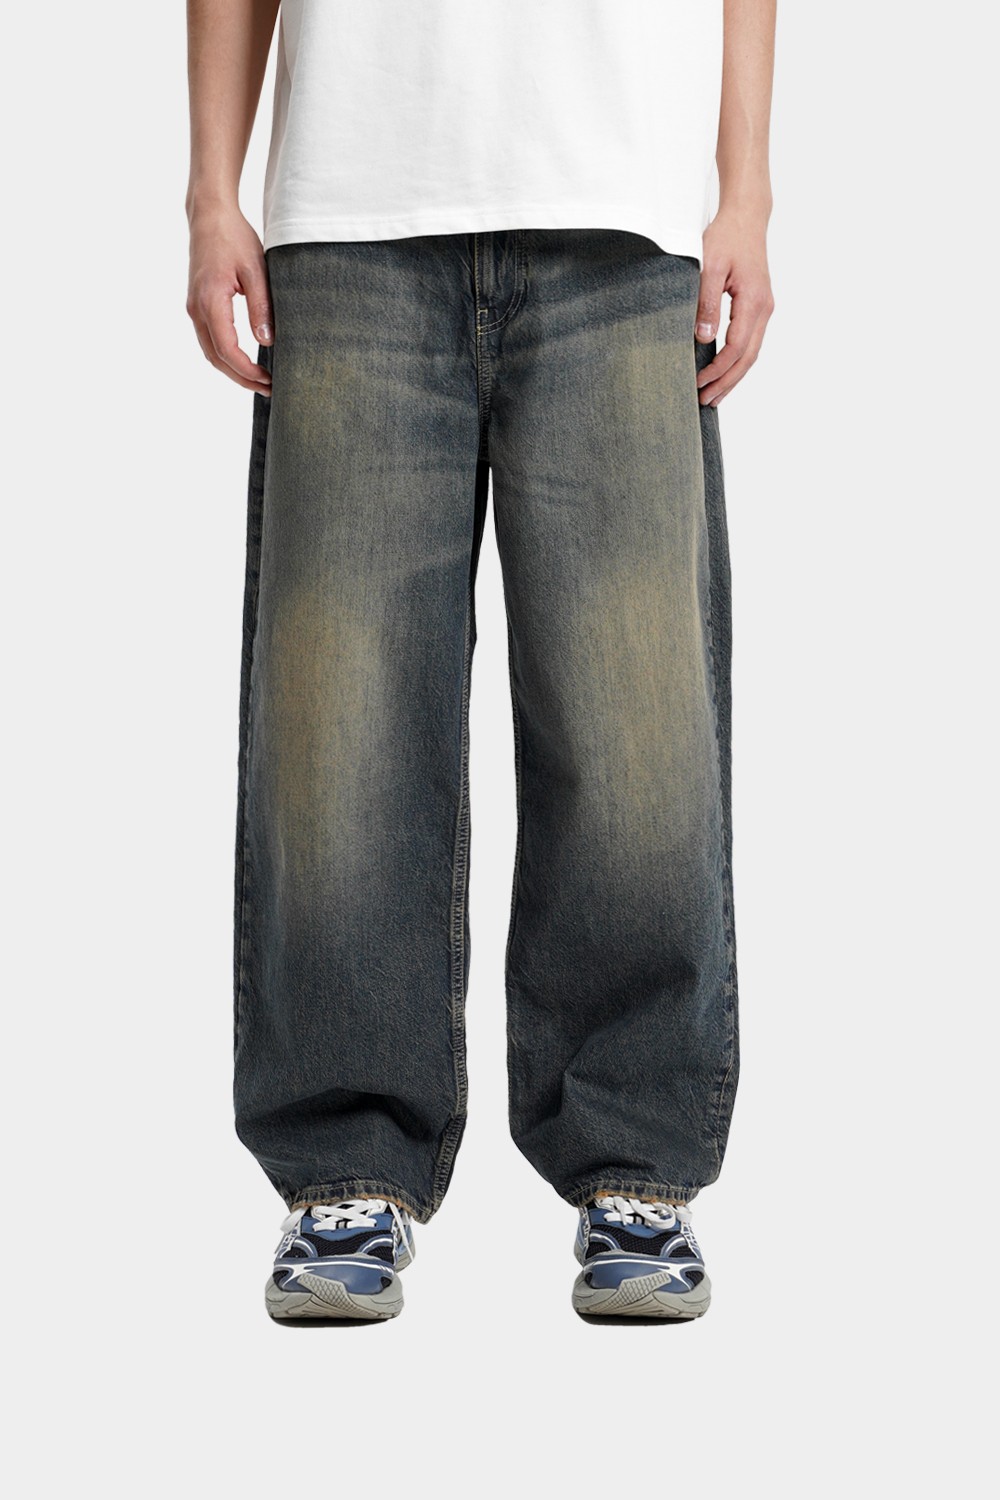 Dirty Tint Jack Jeans (URBN-B-209)